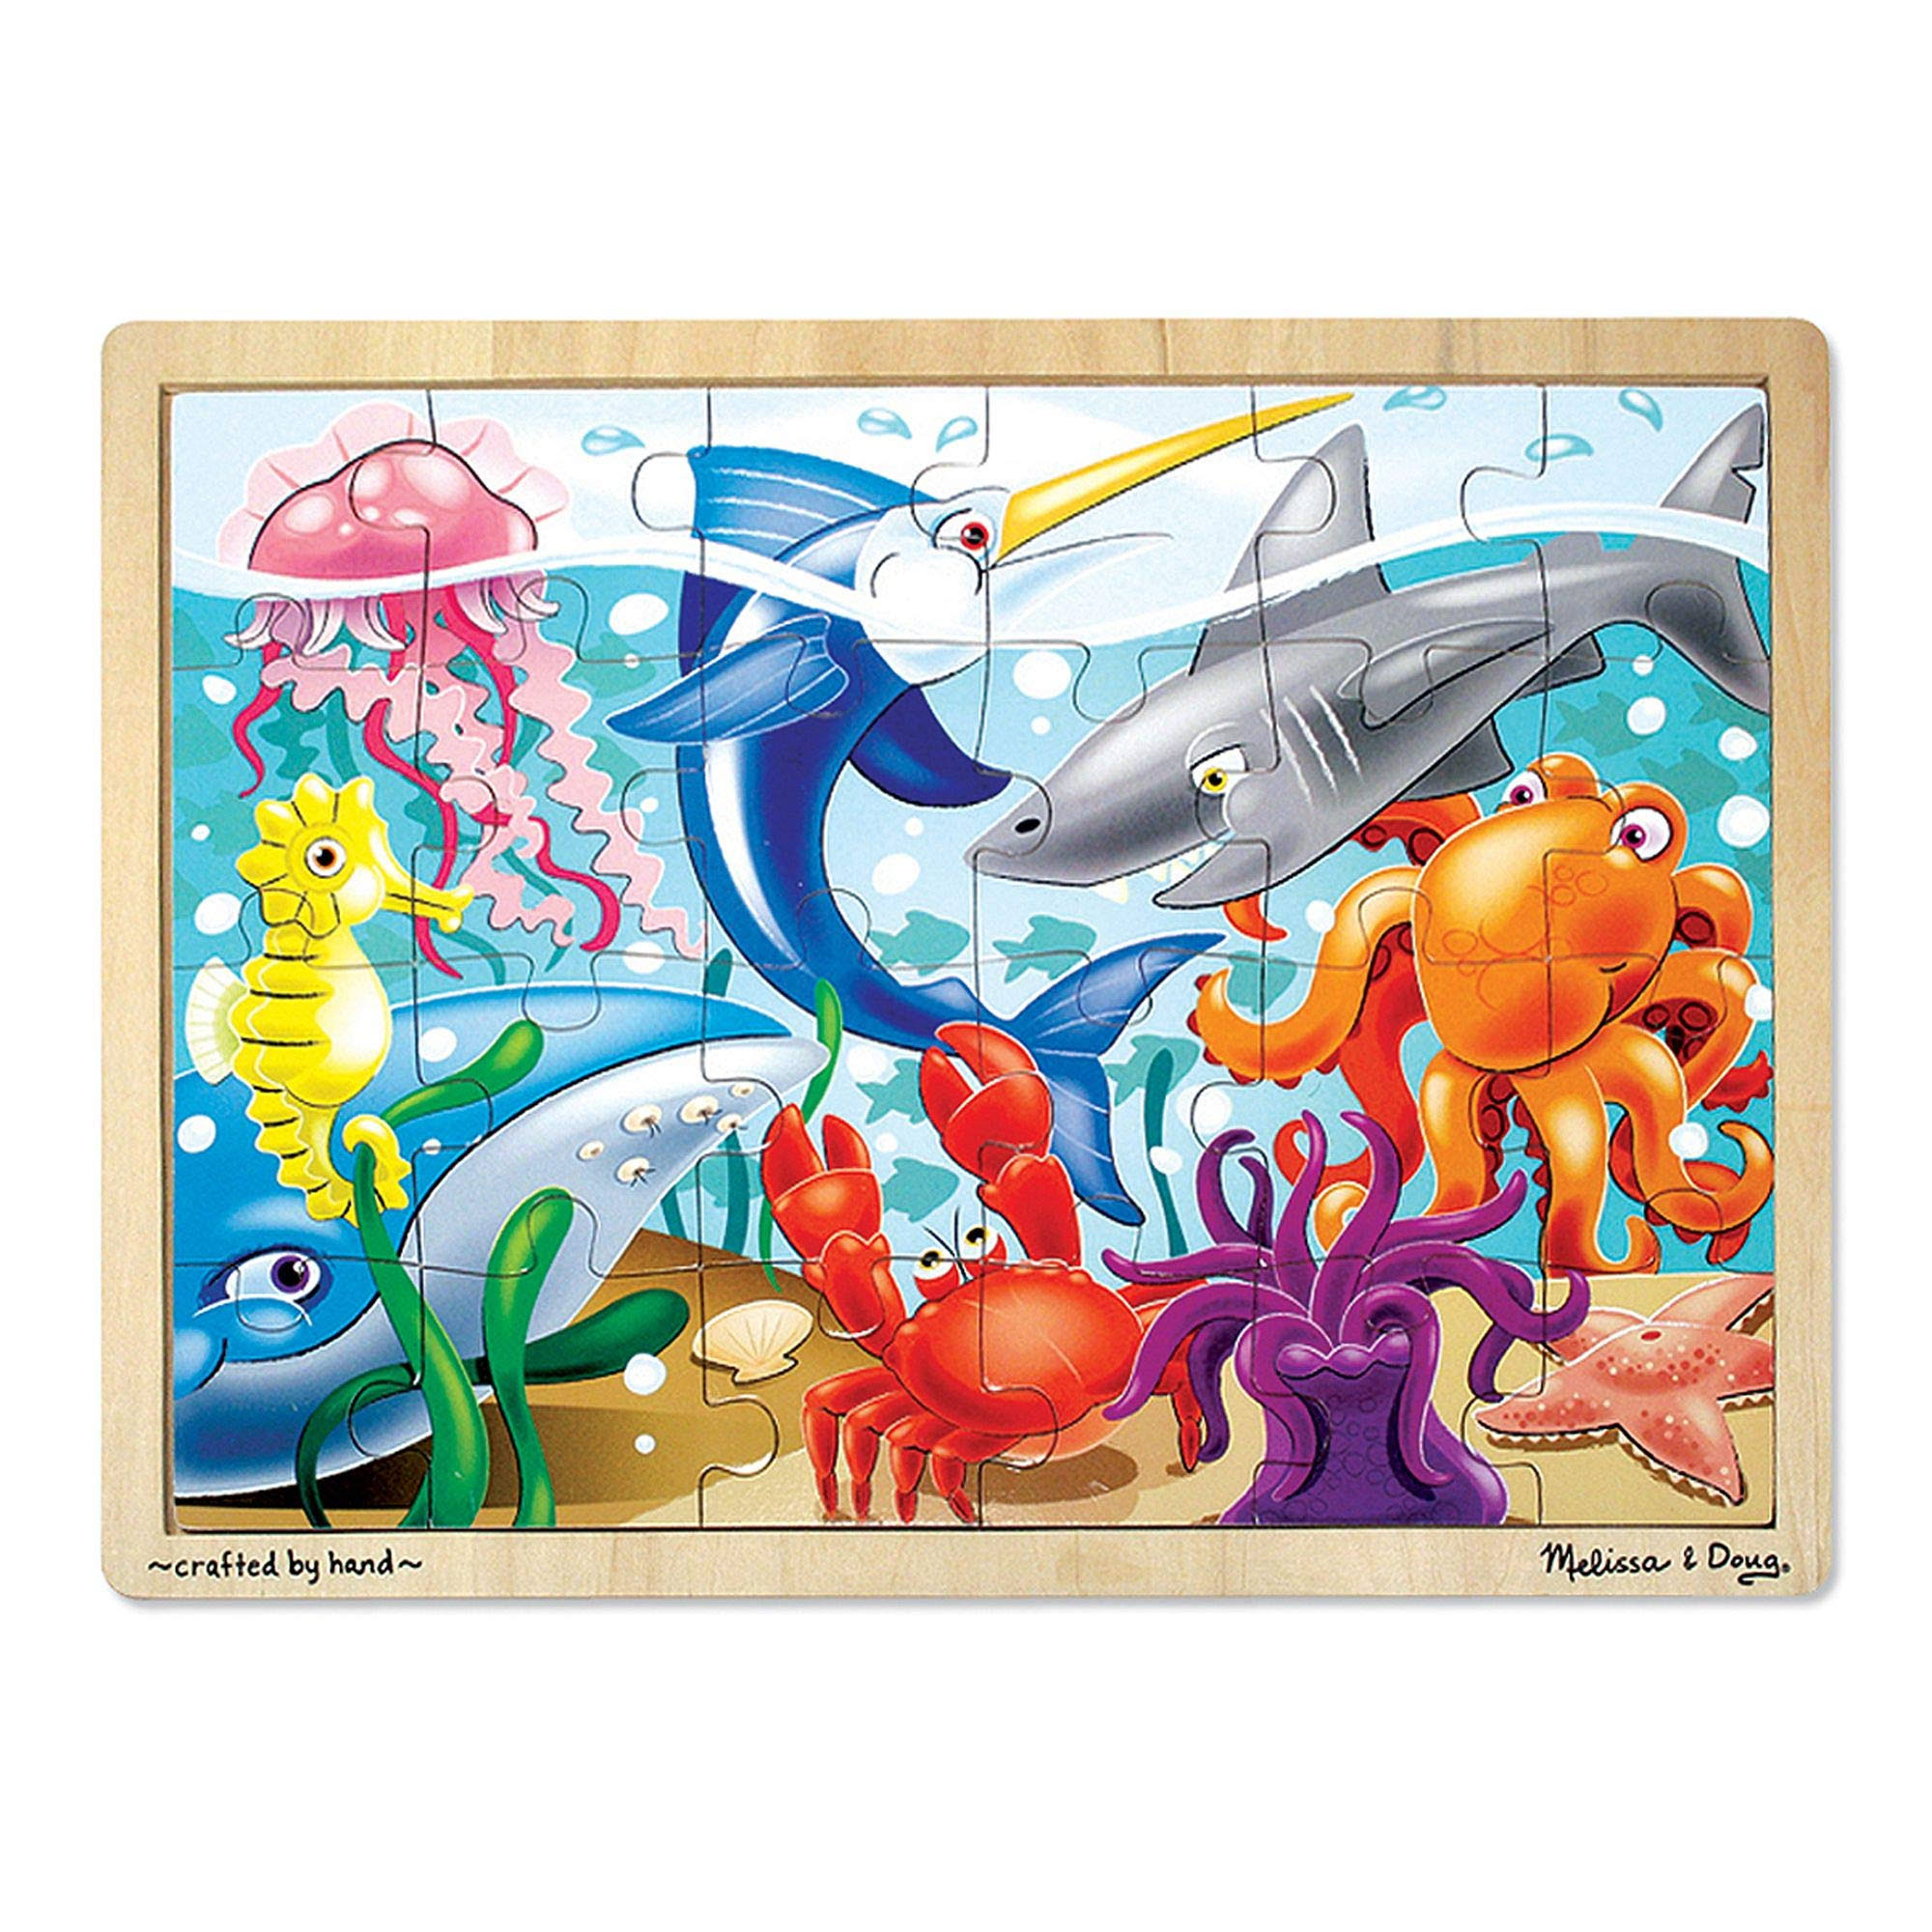 Melissa & Doug Under the Sea Jigsaw Puzzle - 24 Pieces